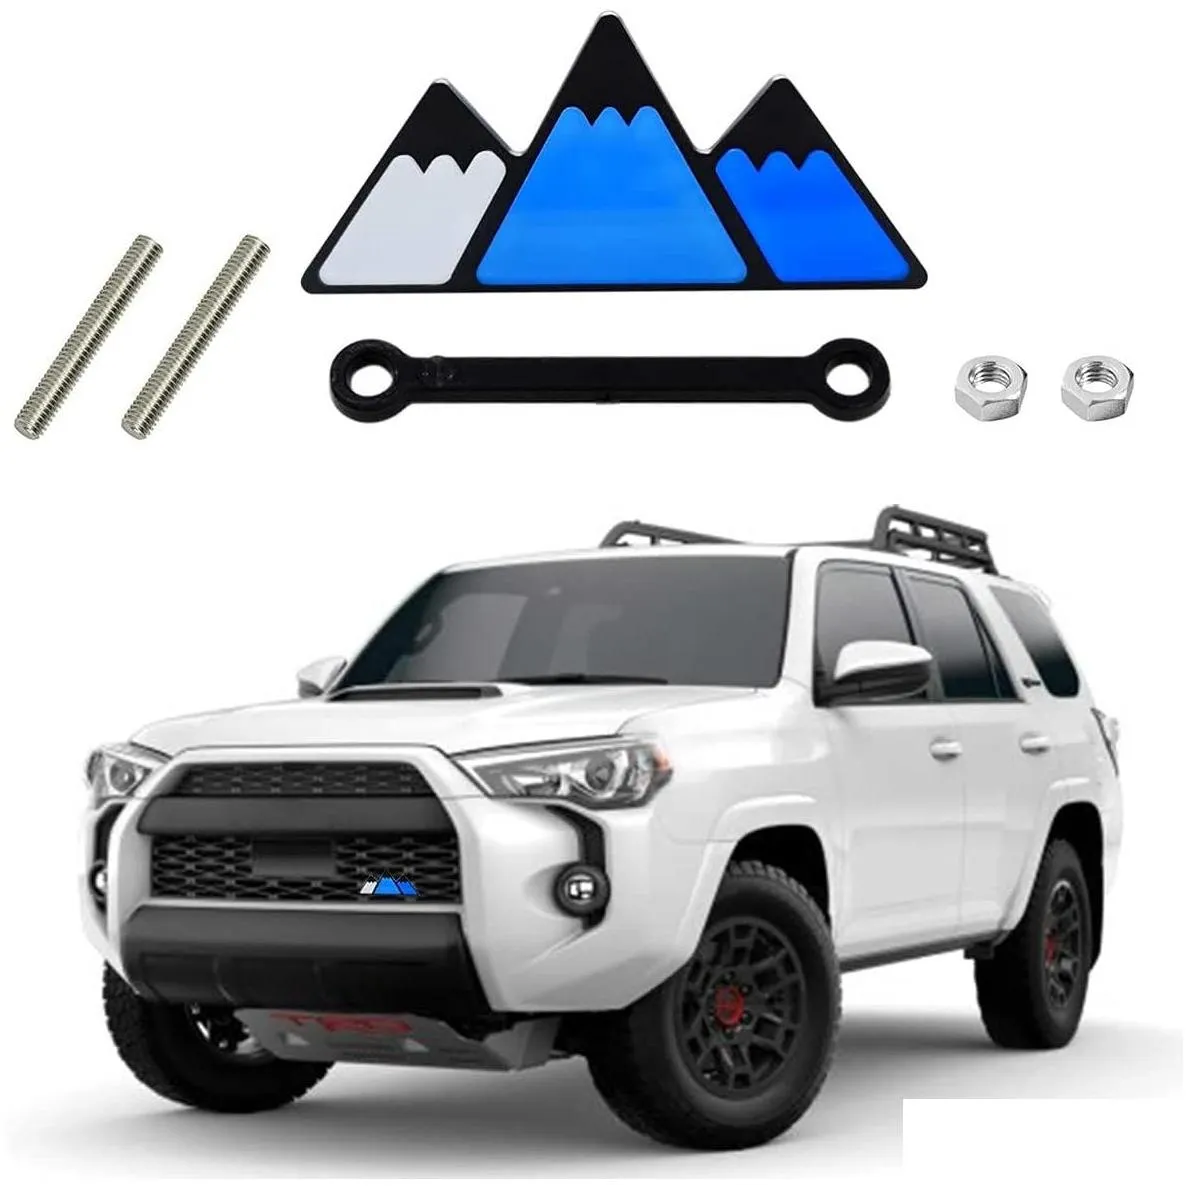 tricolor grille emblem car truck sticker badge for tacoma 4runner tundra sequoia rav4 highlander decoration accessories